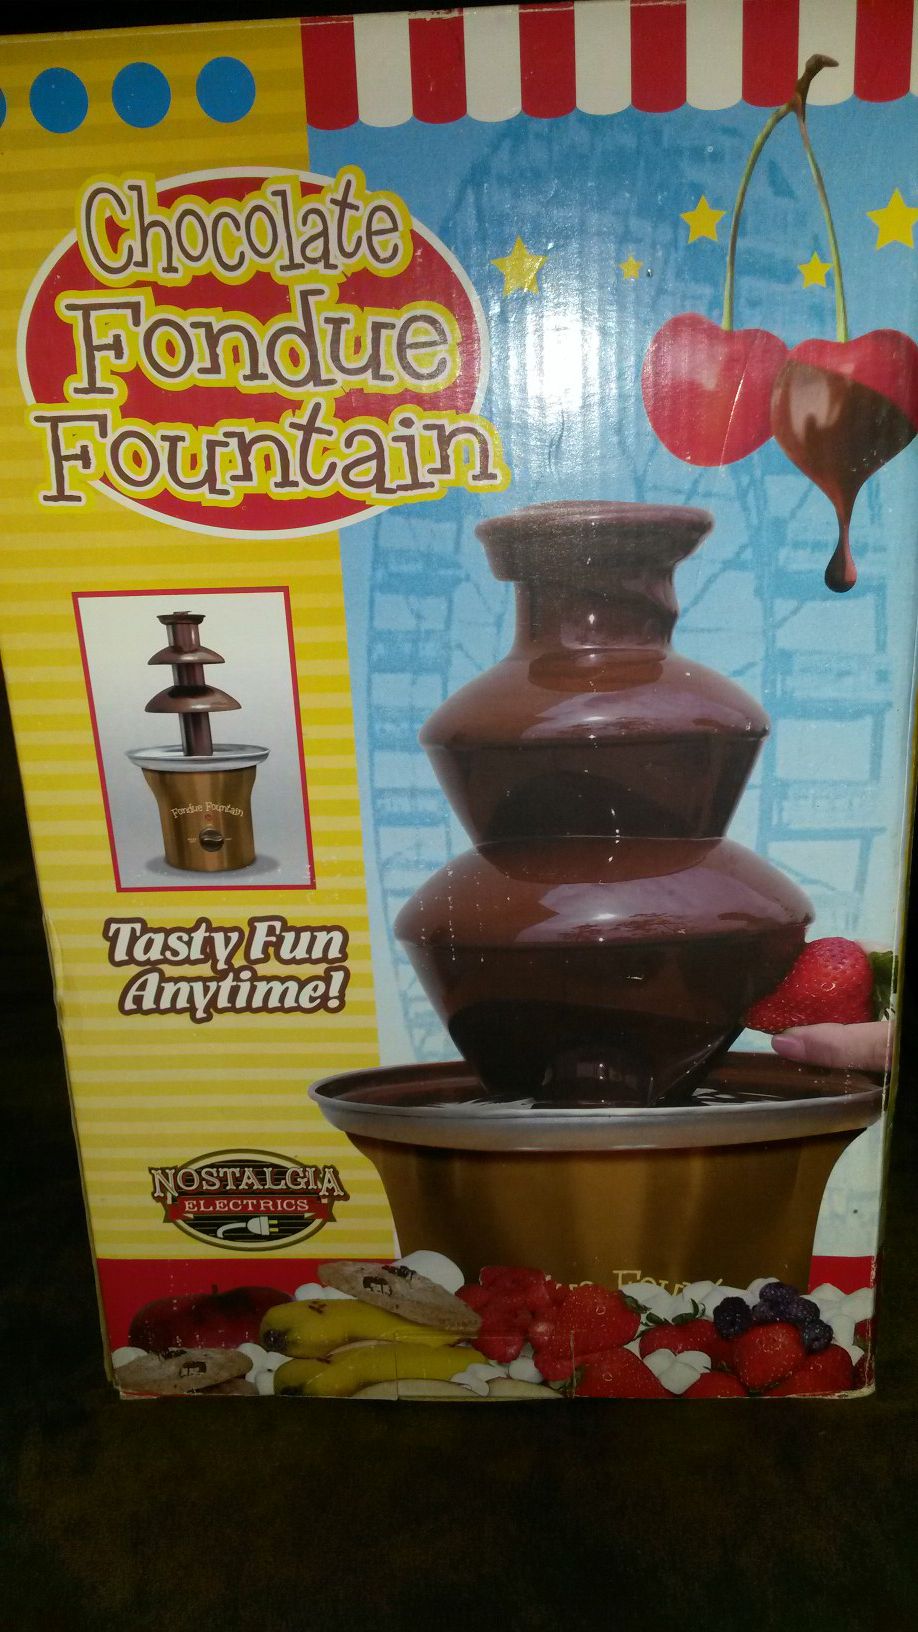 Chocolate Fondue Fountain by Nostalgia Electrics